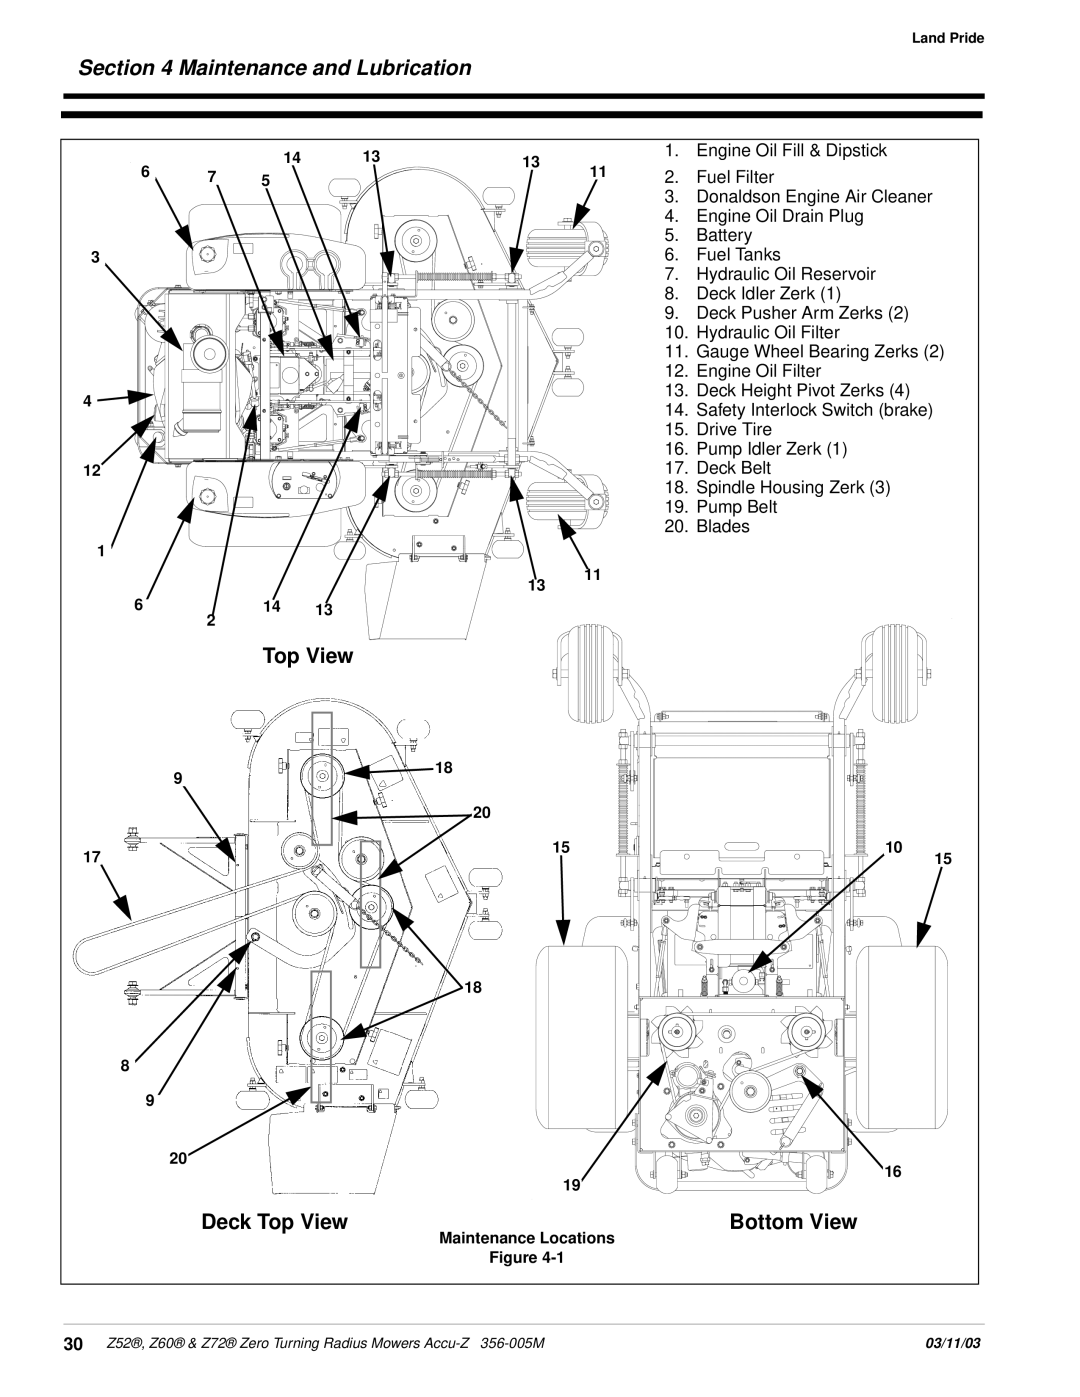 Land Pride Z52 , Z60, Z72 manual Maintenance and Lubrication, Deck Top View, Bottom View 